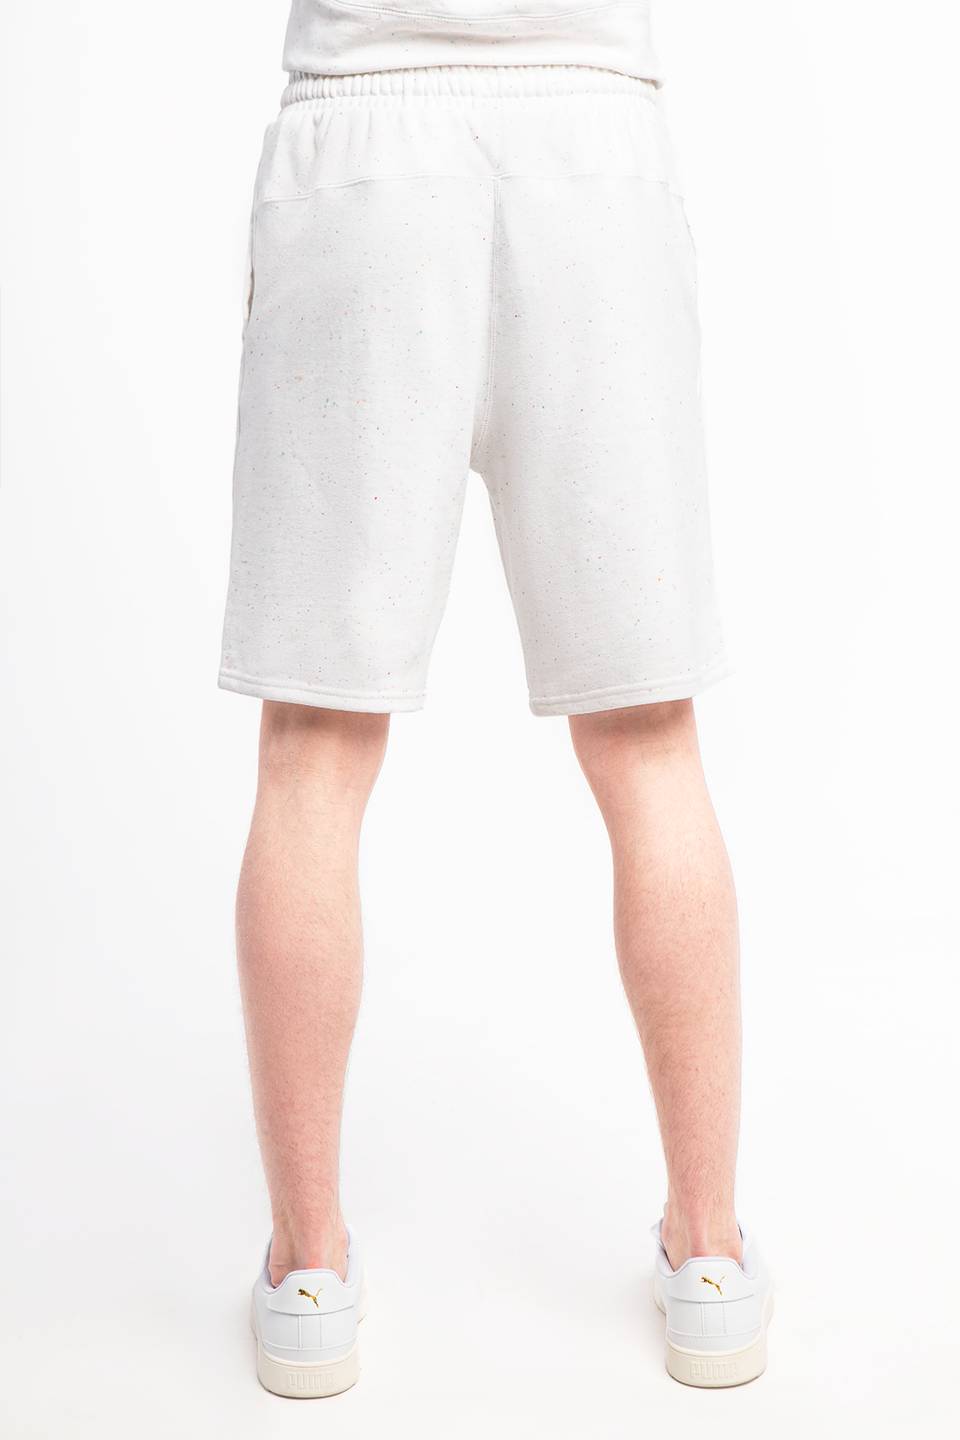 Spodnie Puma RE:Collection Longline Shorts 10